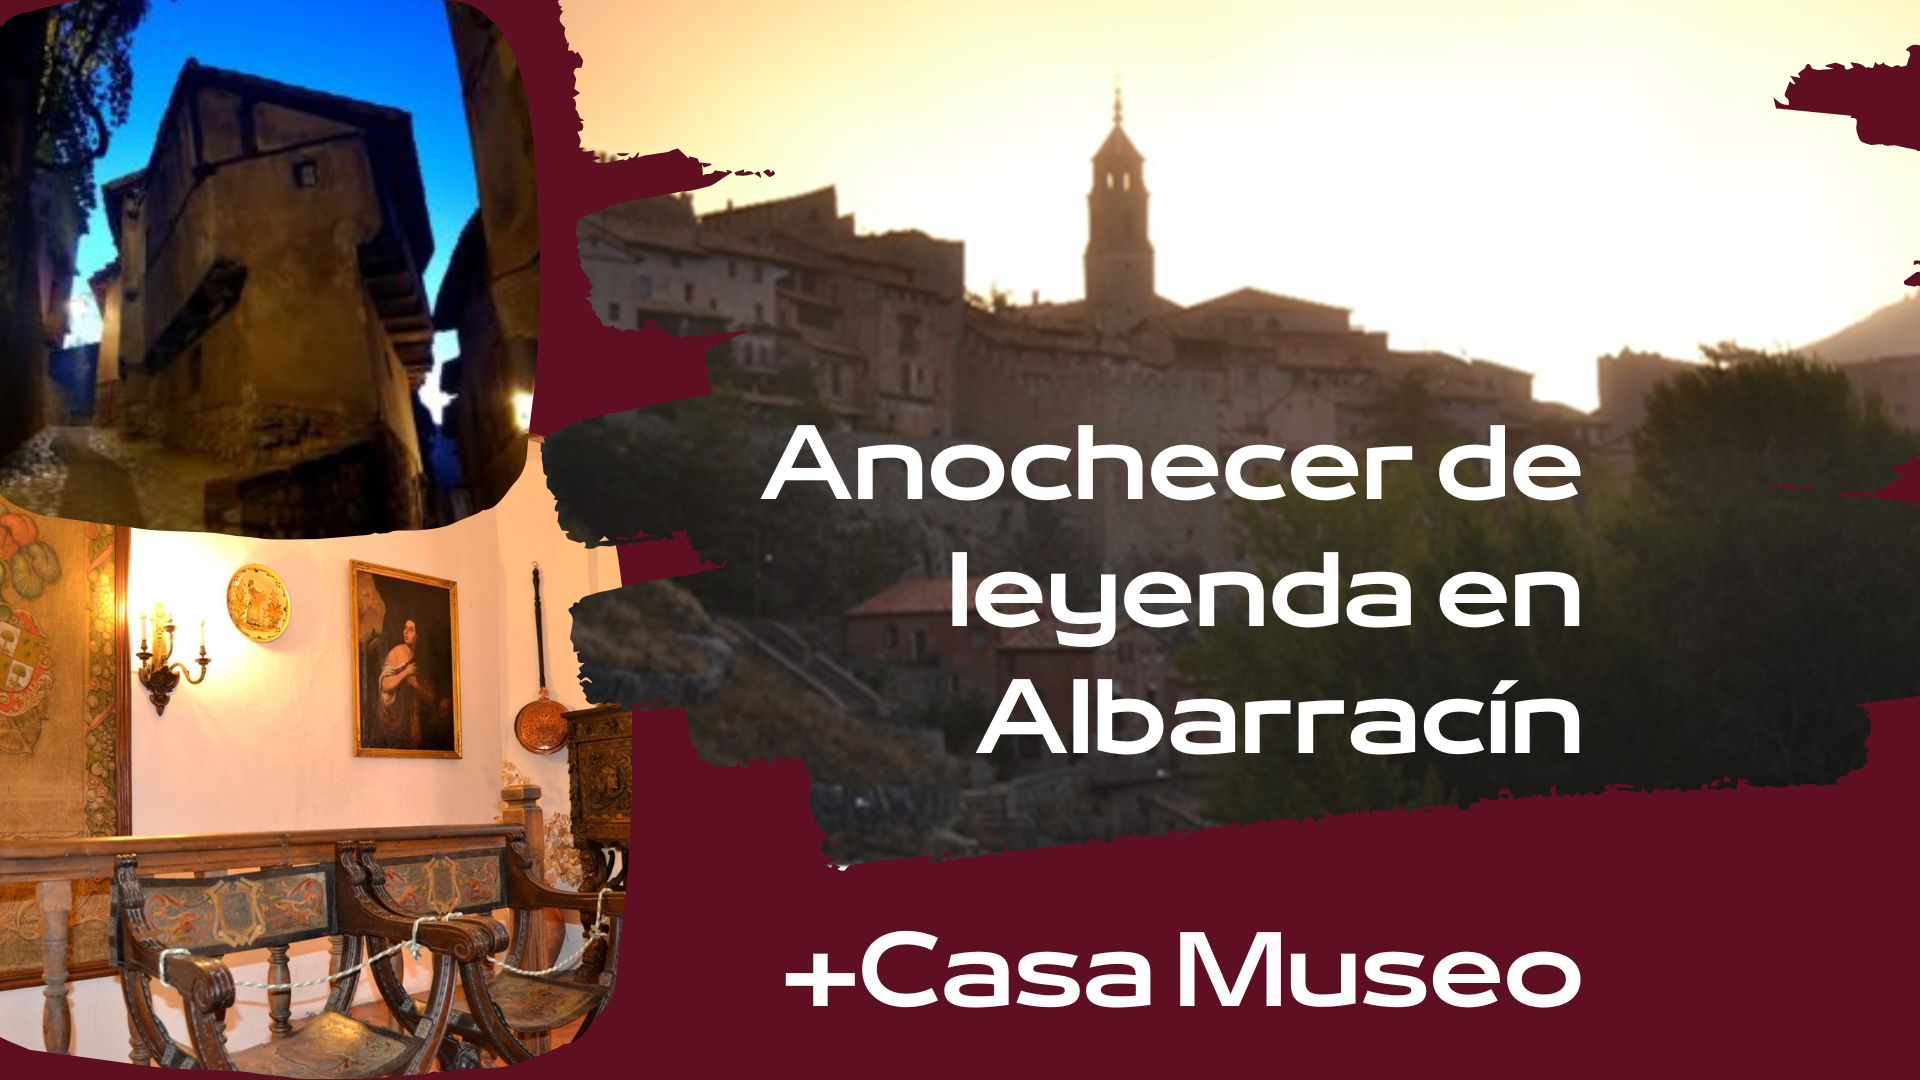 Sábado 14, Visita Guiada en Albarracín…Anochecer de Leyendas + Casa Museo! Reserva tu plaza!